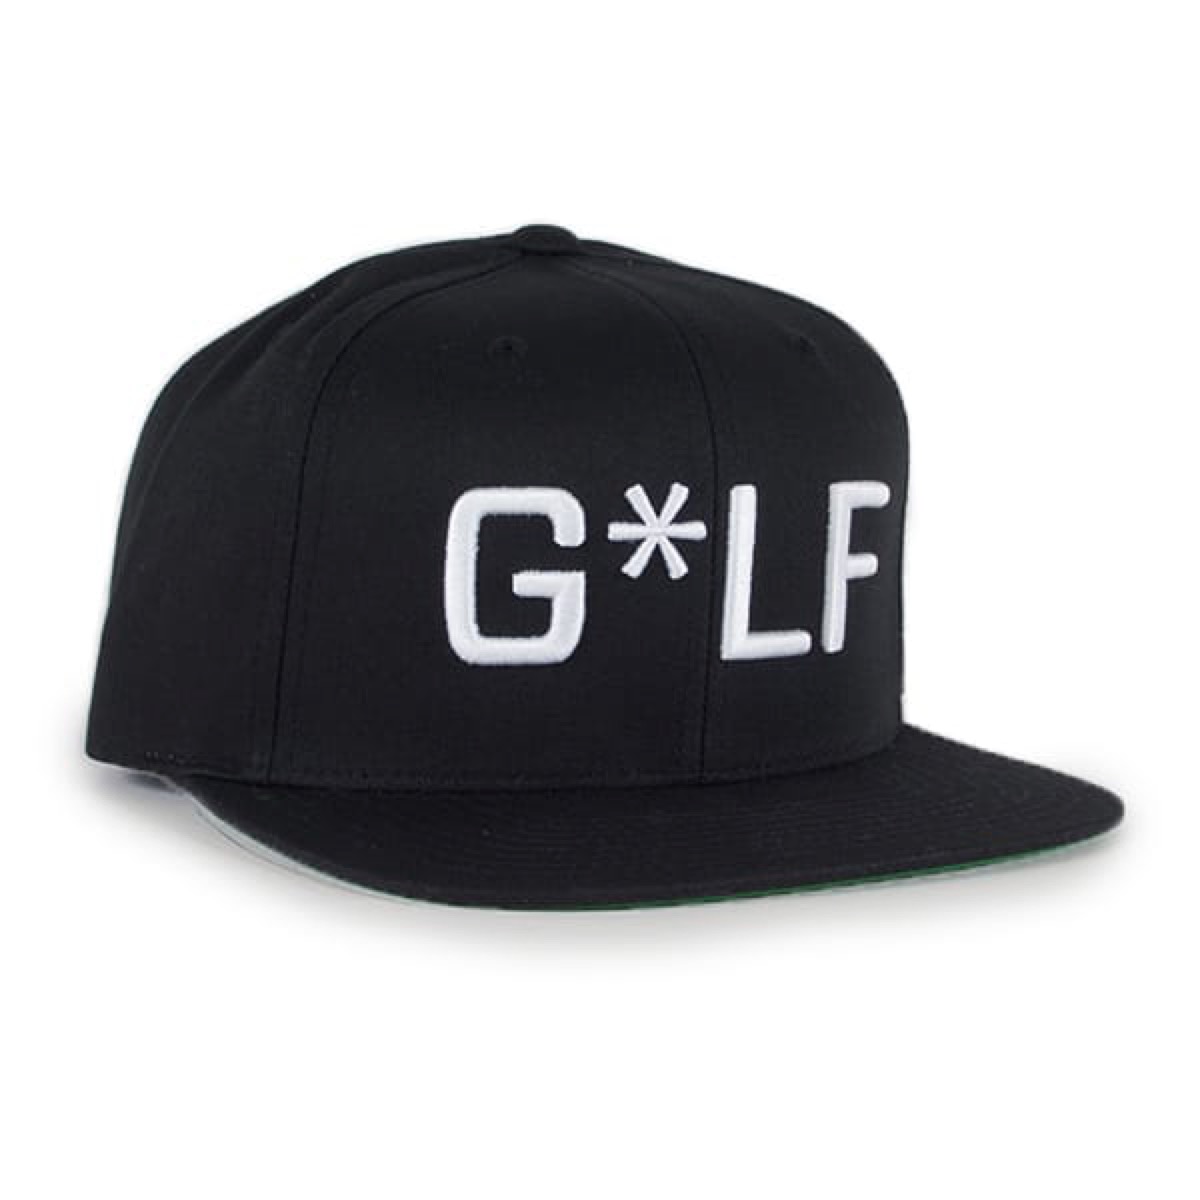 golf hat - G*LF SNAPBACK